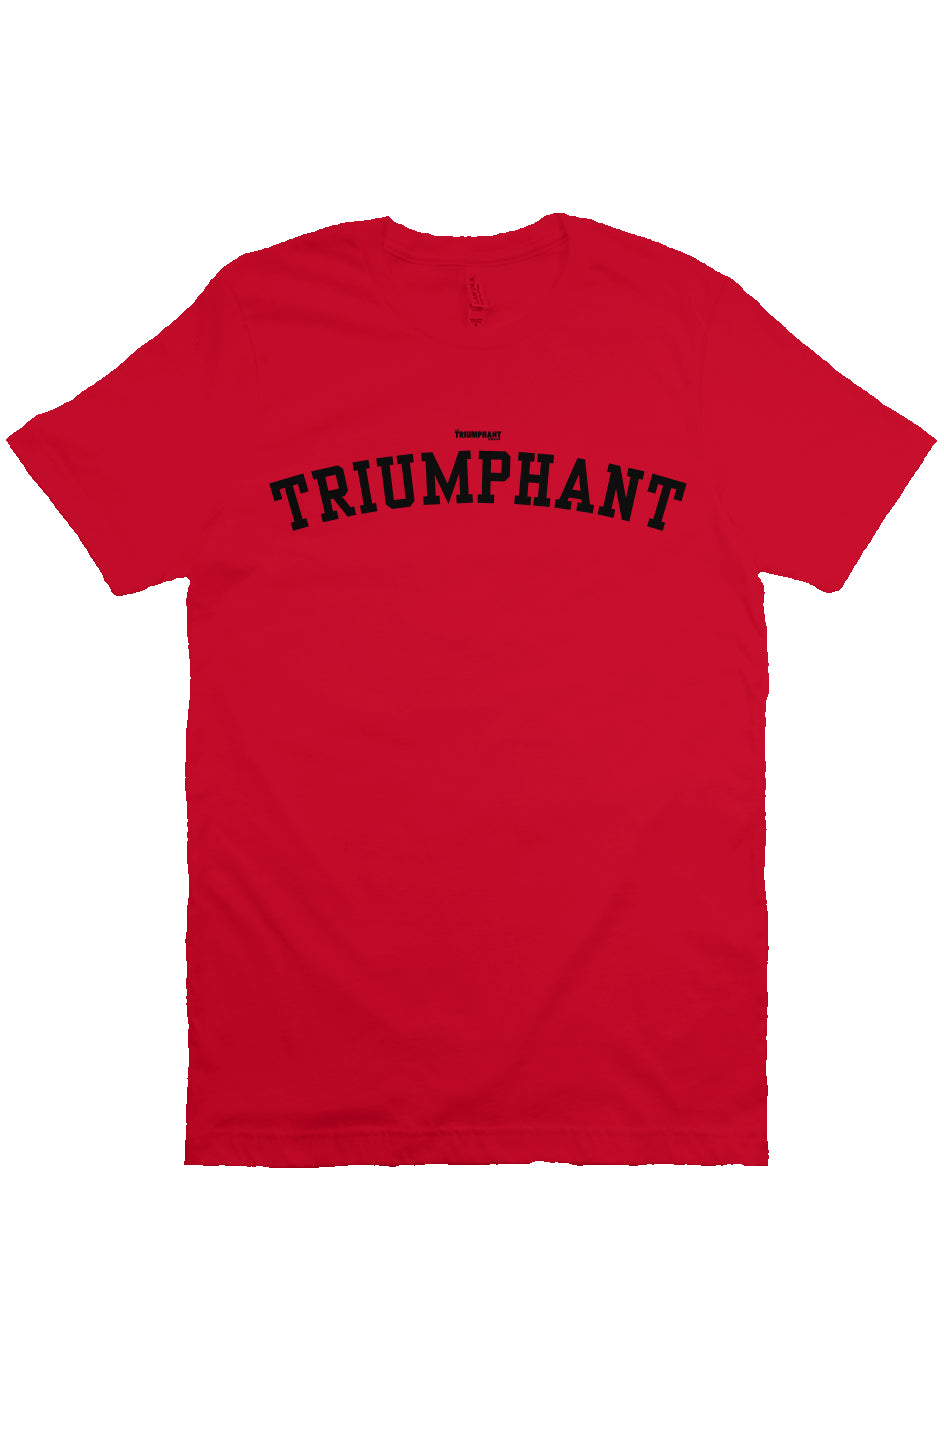 Triumphant | A&D Tee